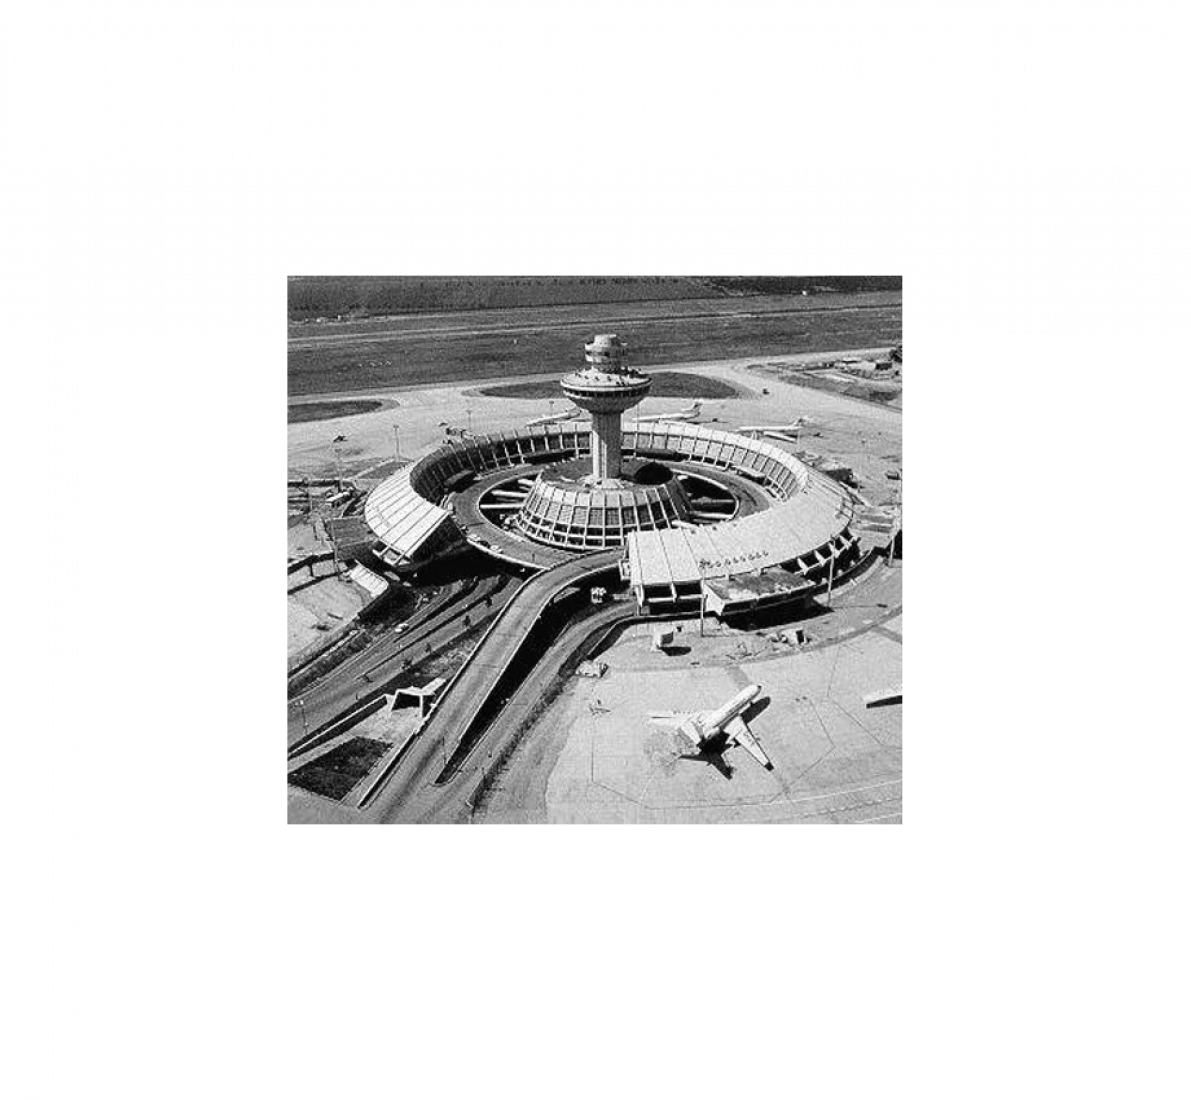 Aeropuerto internacional de Zvartnotz, Yerevan, Armenia, 1980.  Arquitectos: A. Tarkhanyan, S. Khachikyan, L. Cherkizyan, Z. Shekhlyan.  Ingeniero.- S. Bagdasaryan.